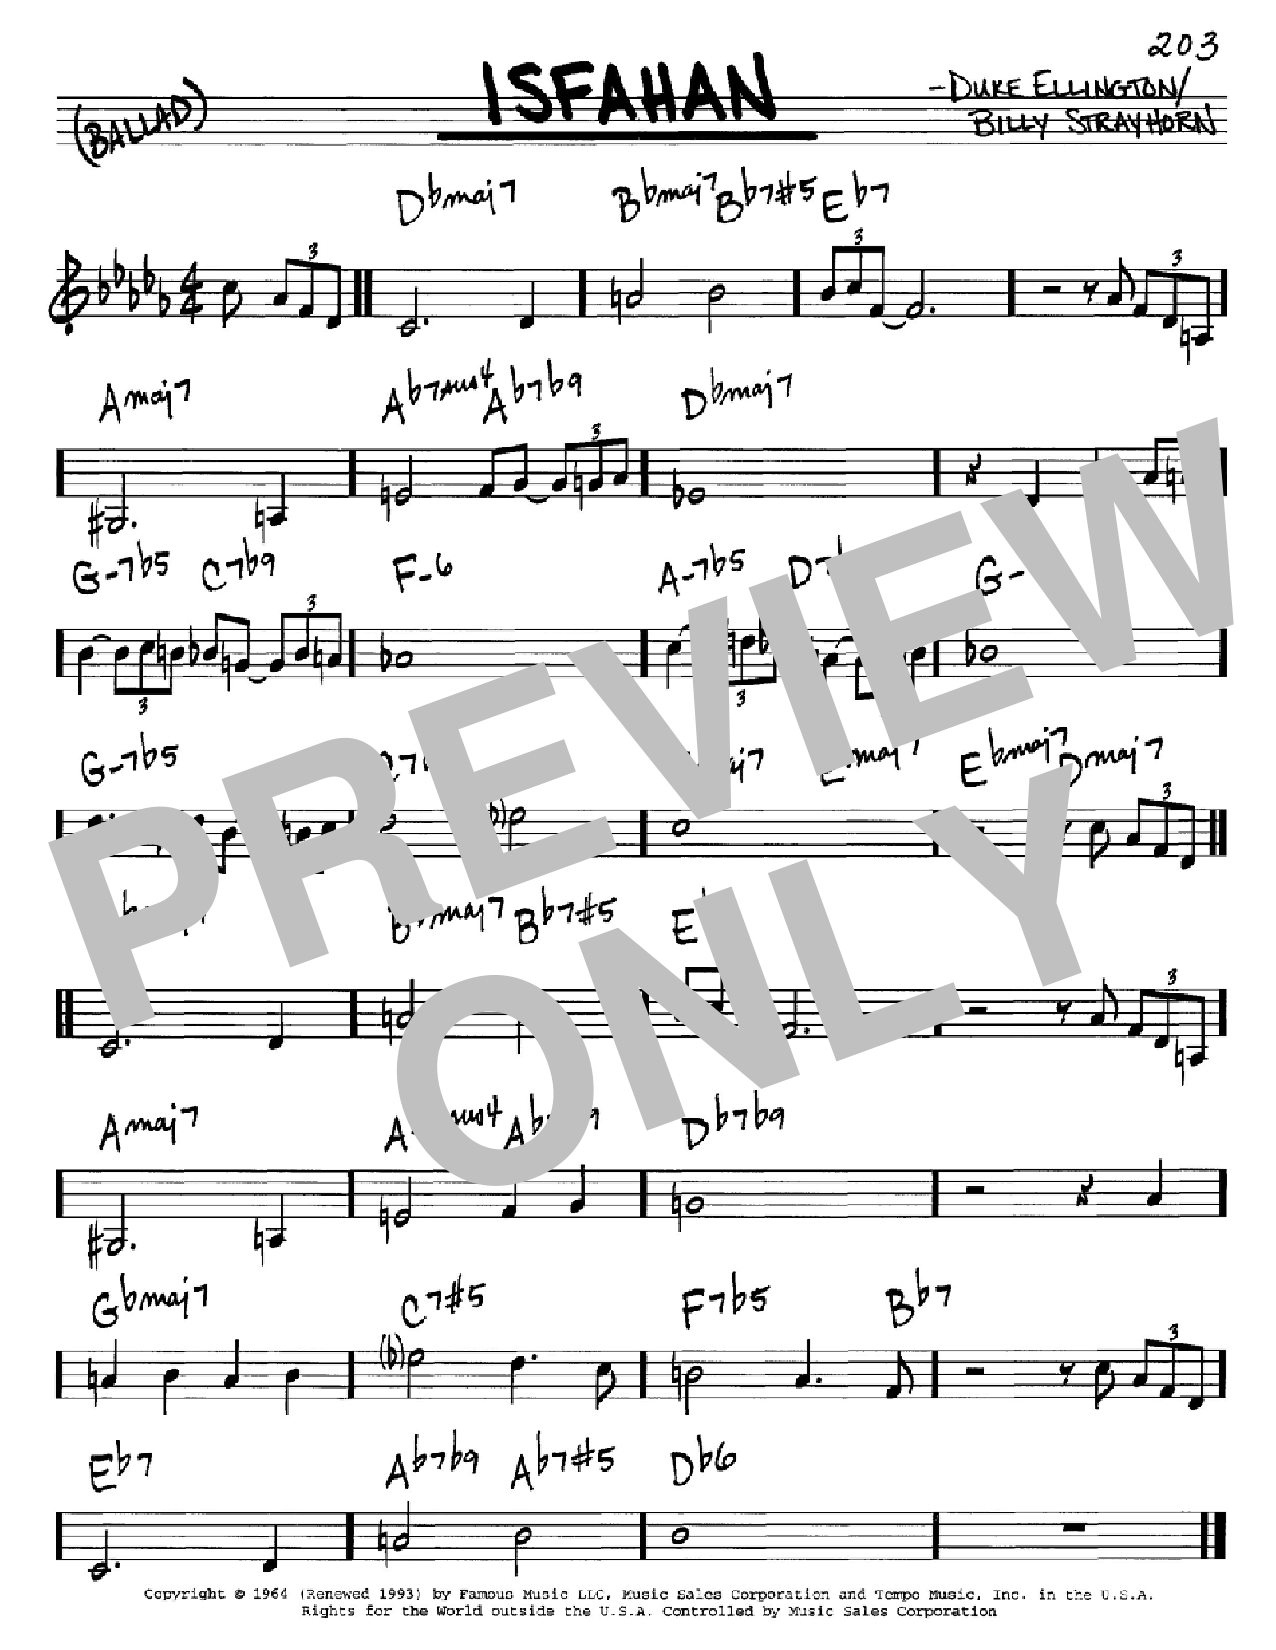 Duke Ellington Isfahan Sheet Music Notes & Chords for Real Book - Melody & Chords - C Instruments - Download or Print PDF